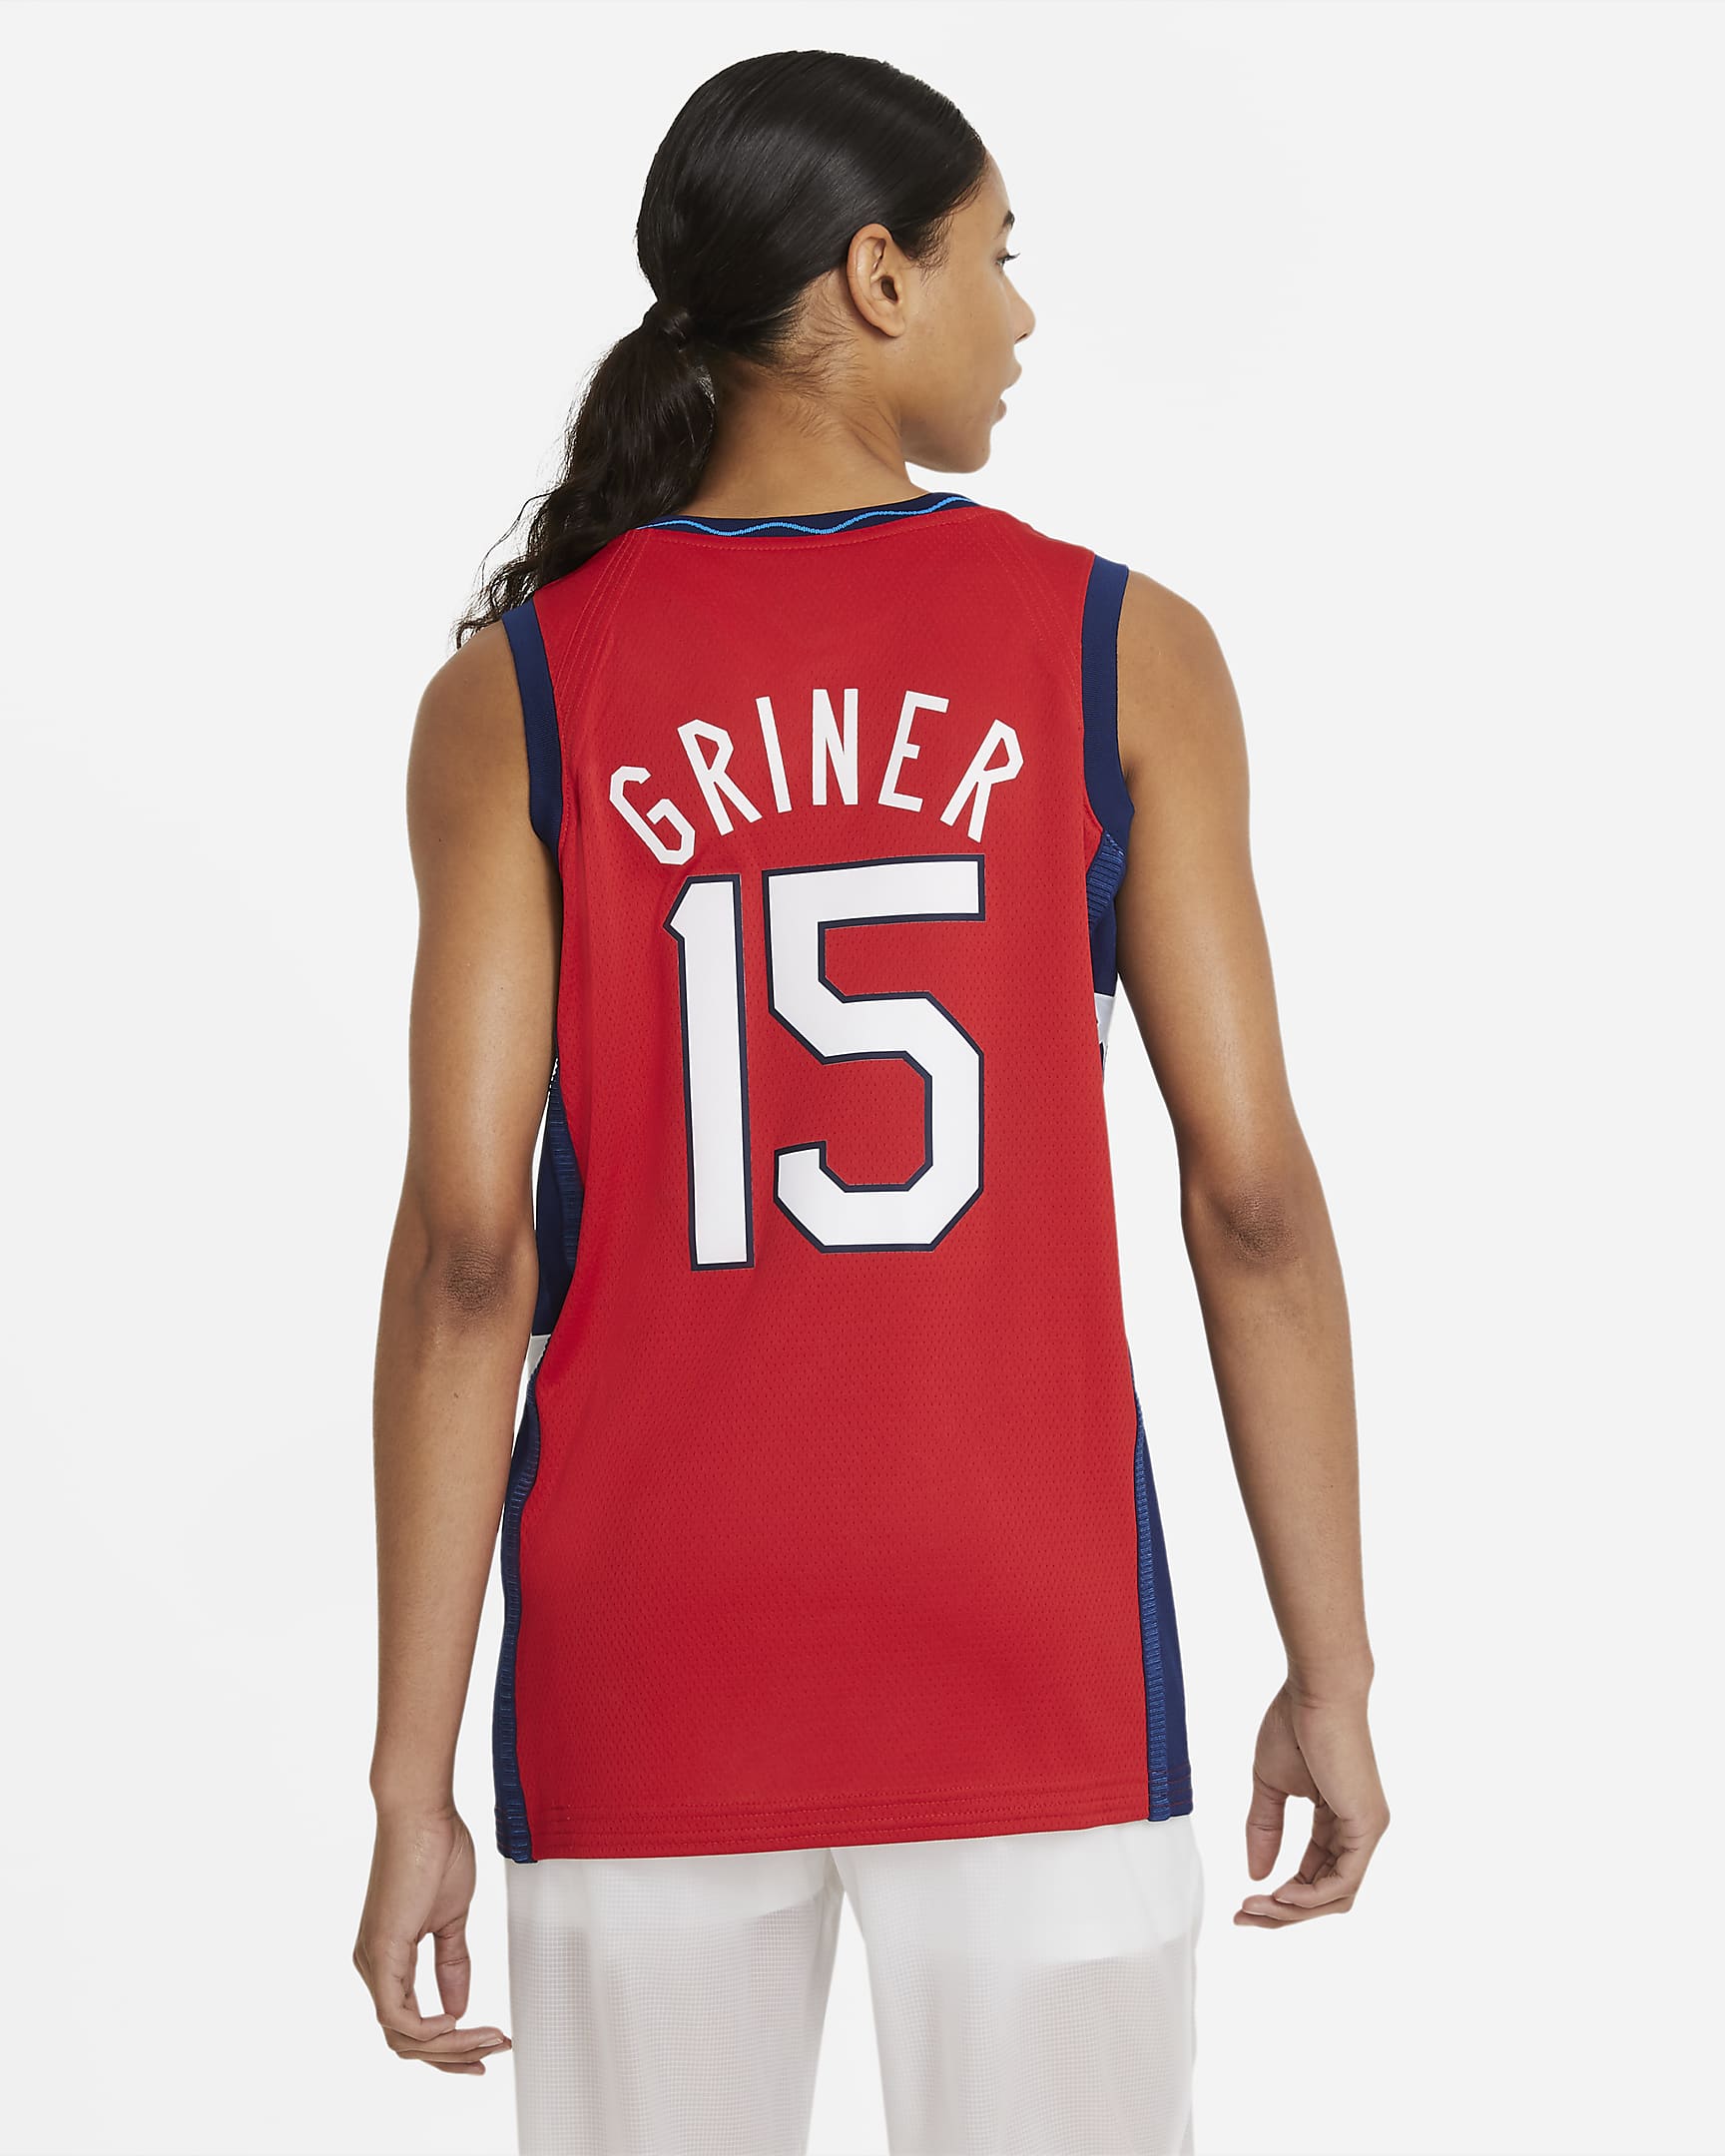 Jersey de básquetbol para mujer Nike Team USA (Brittney Griner) (Road ...